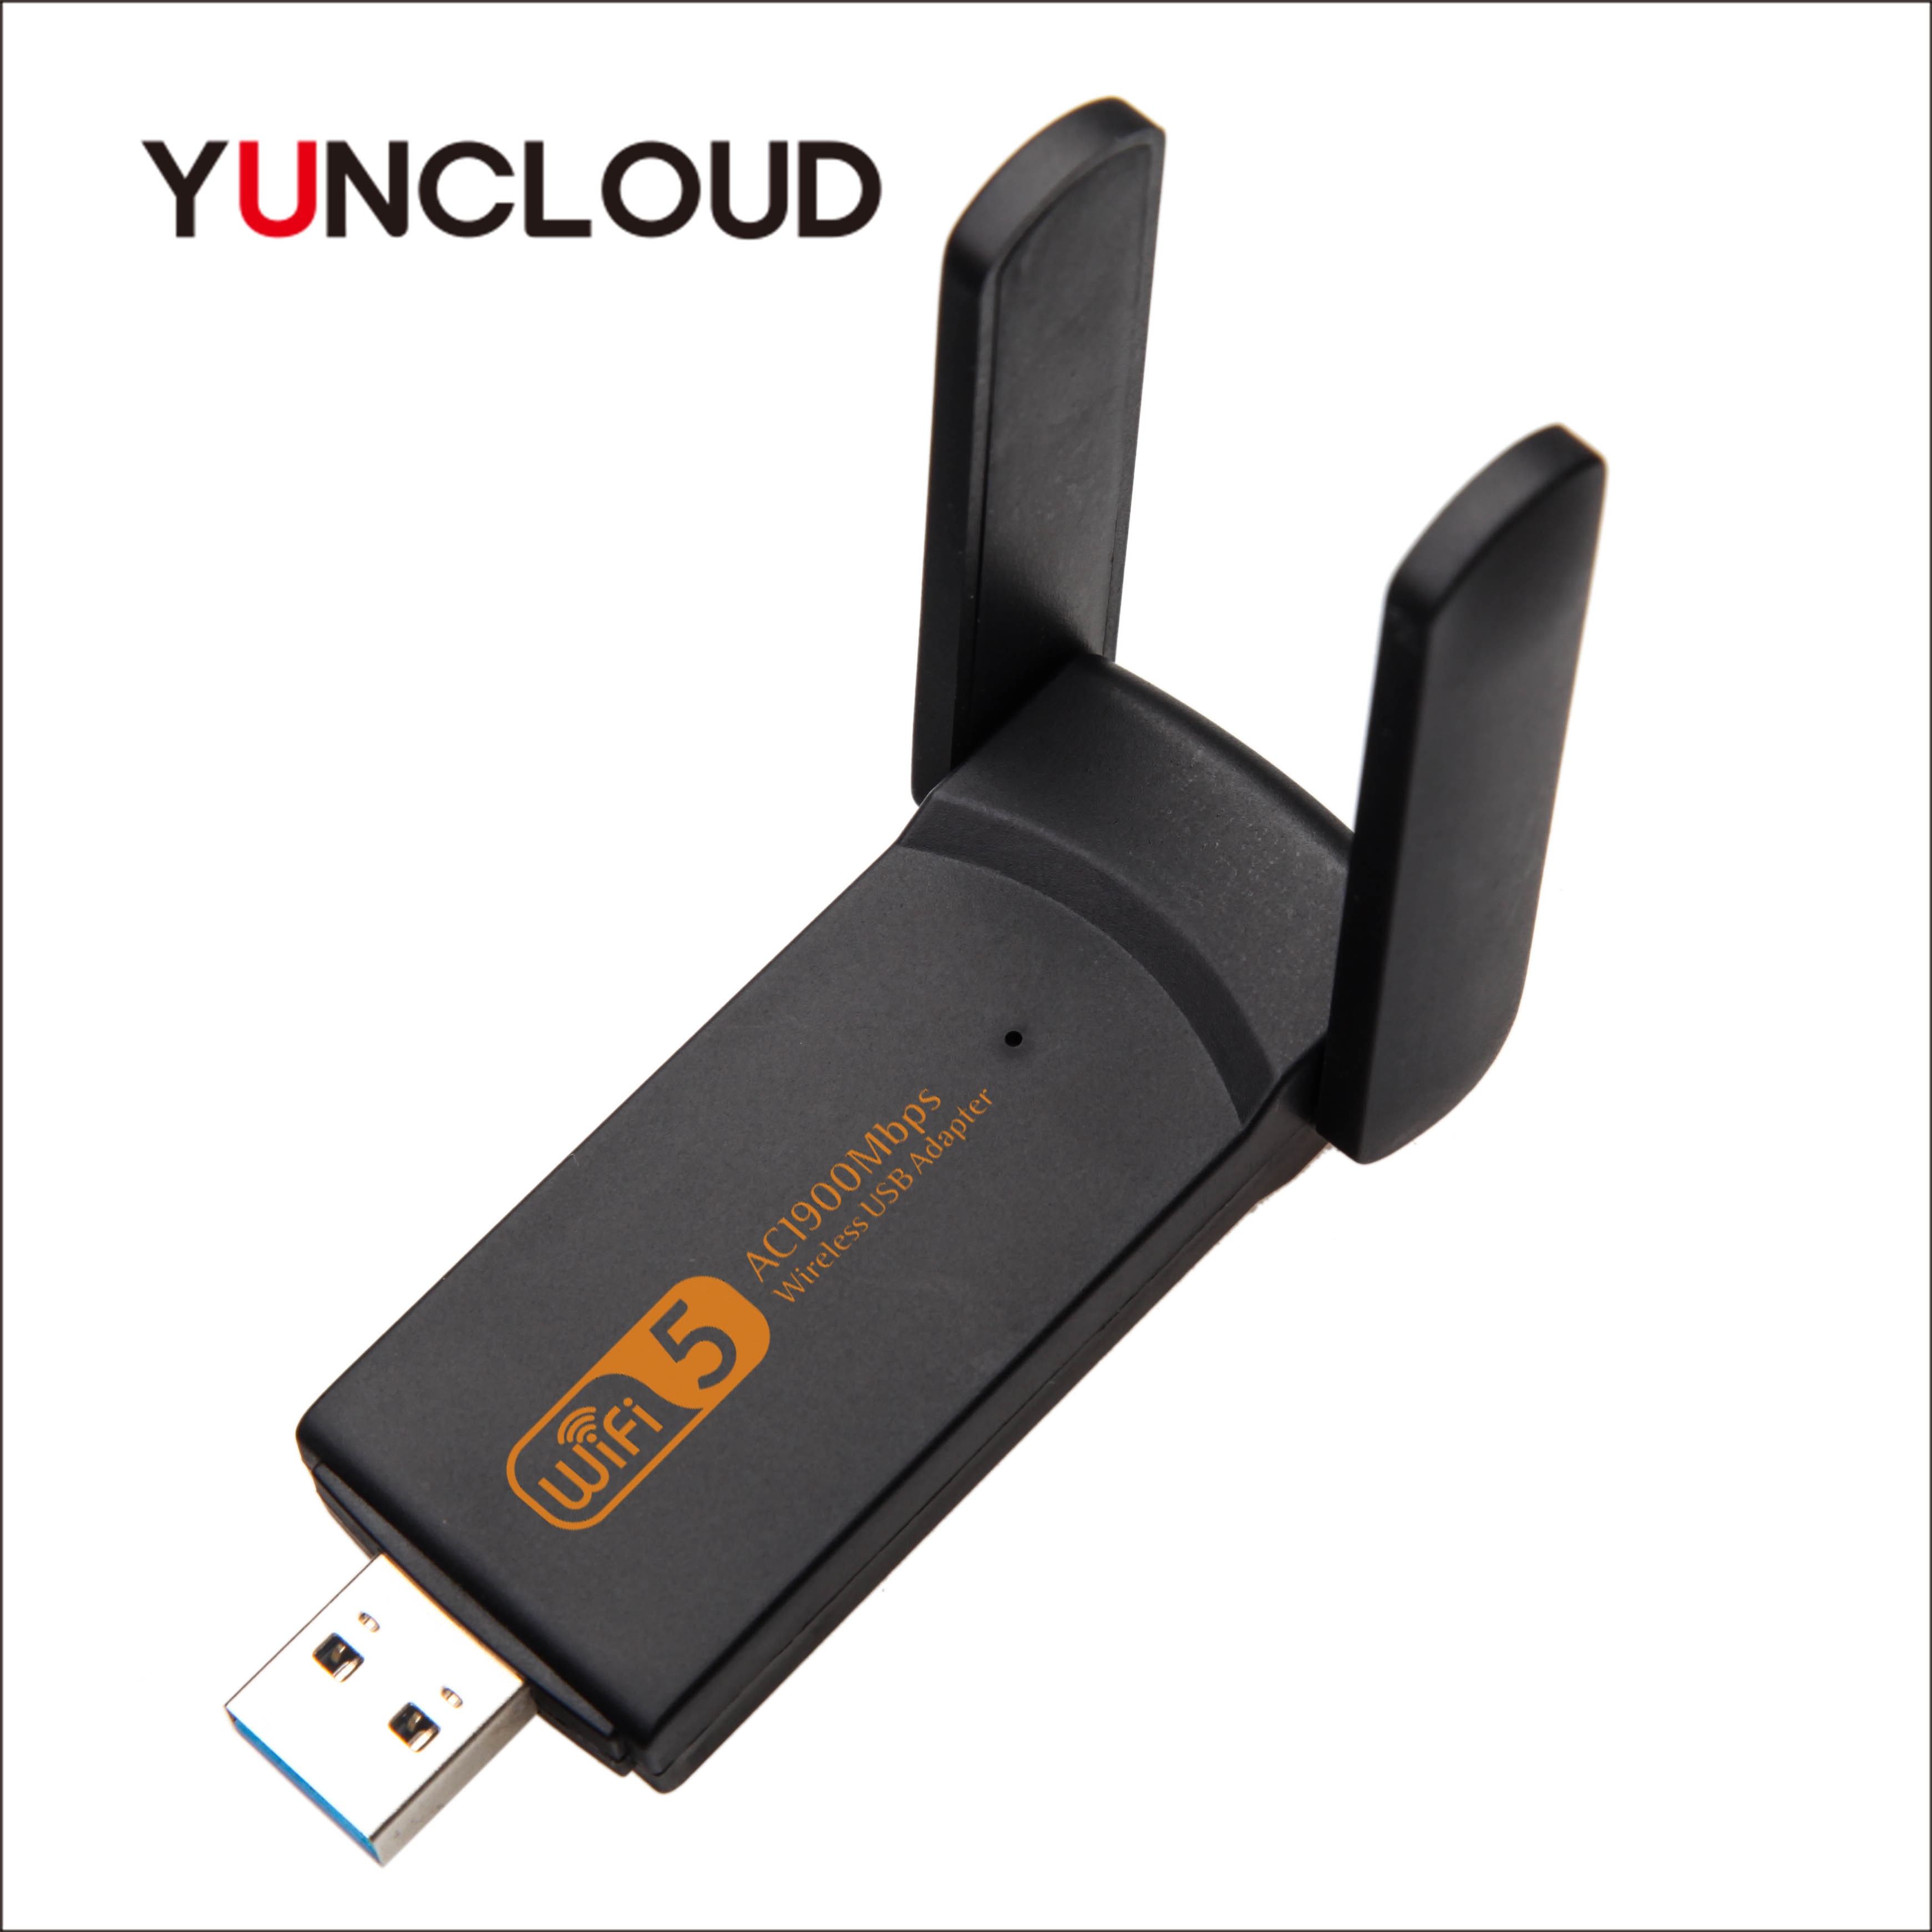 Yuncloud Usb Wifi Dongle 1900 Mbps Wifi Adapter 2.4G/5G Dual Band USB3.0 Netwerkkaart Usb 3.0 voor Windows Xp Win 7 Mac Os